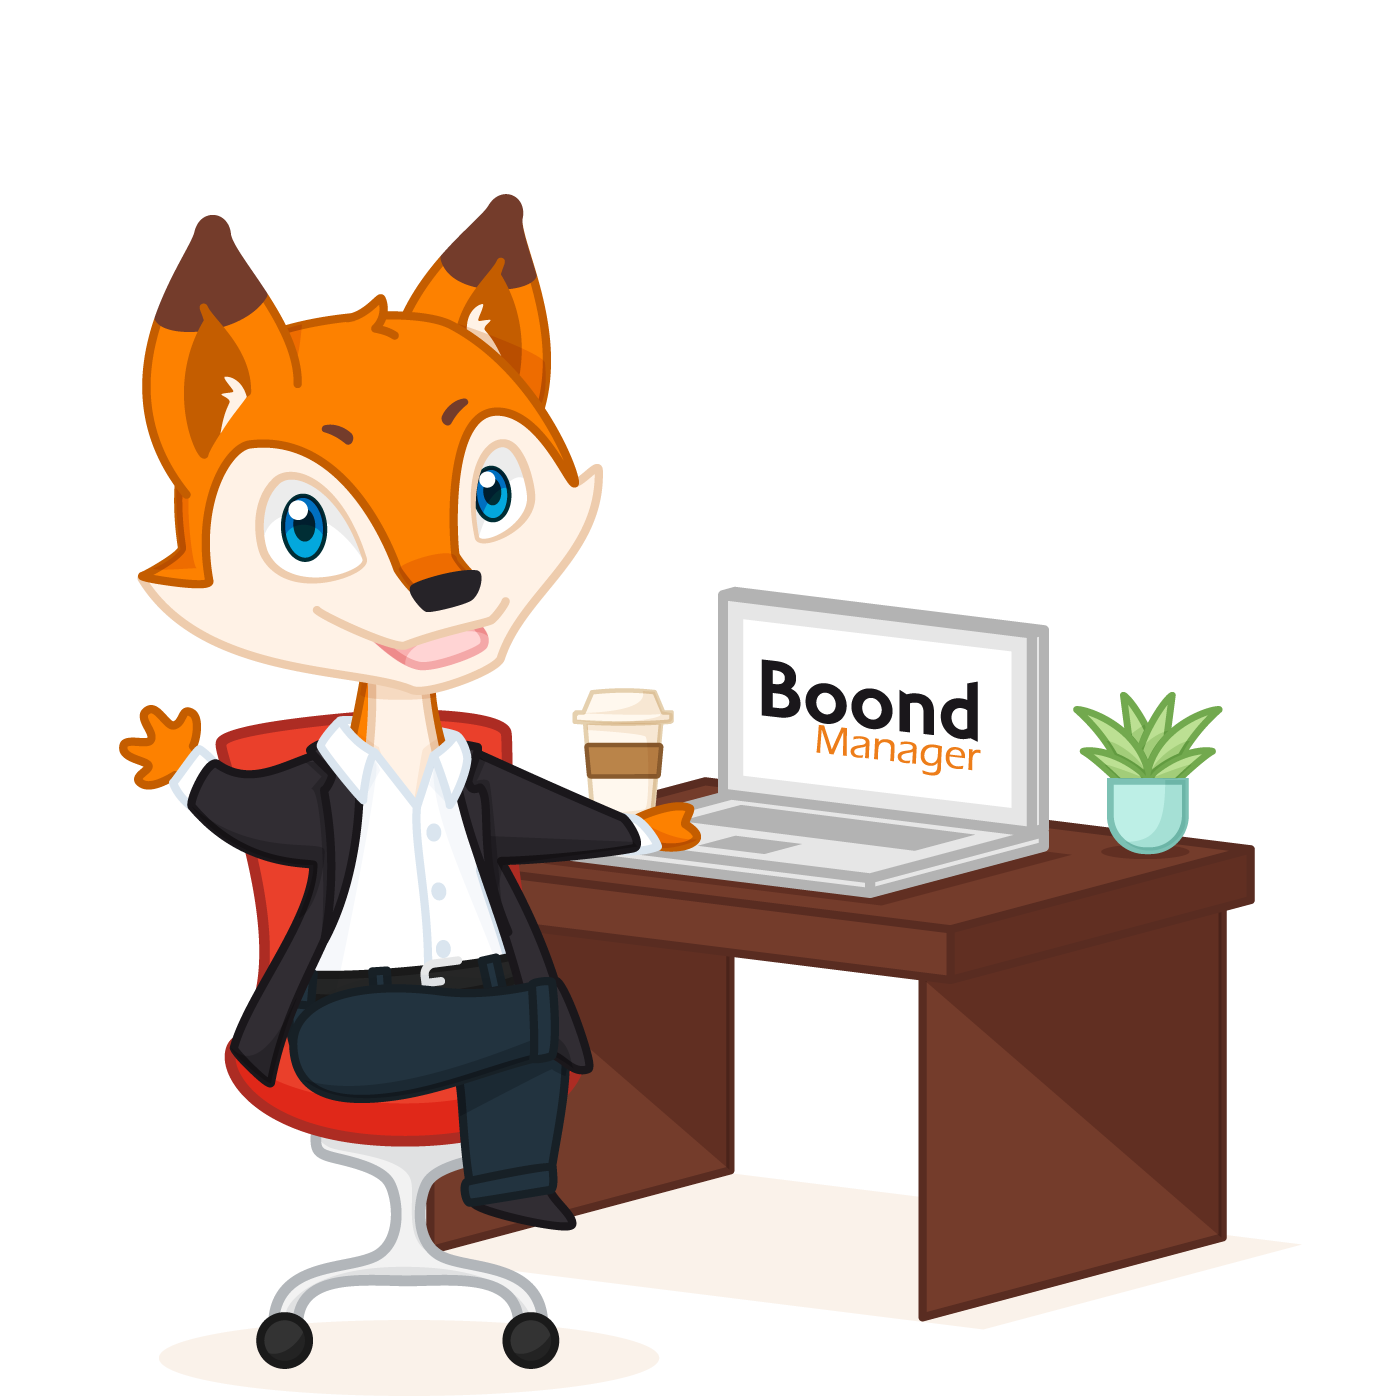 Boondmanager-Mascot-Desk-lg.png